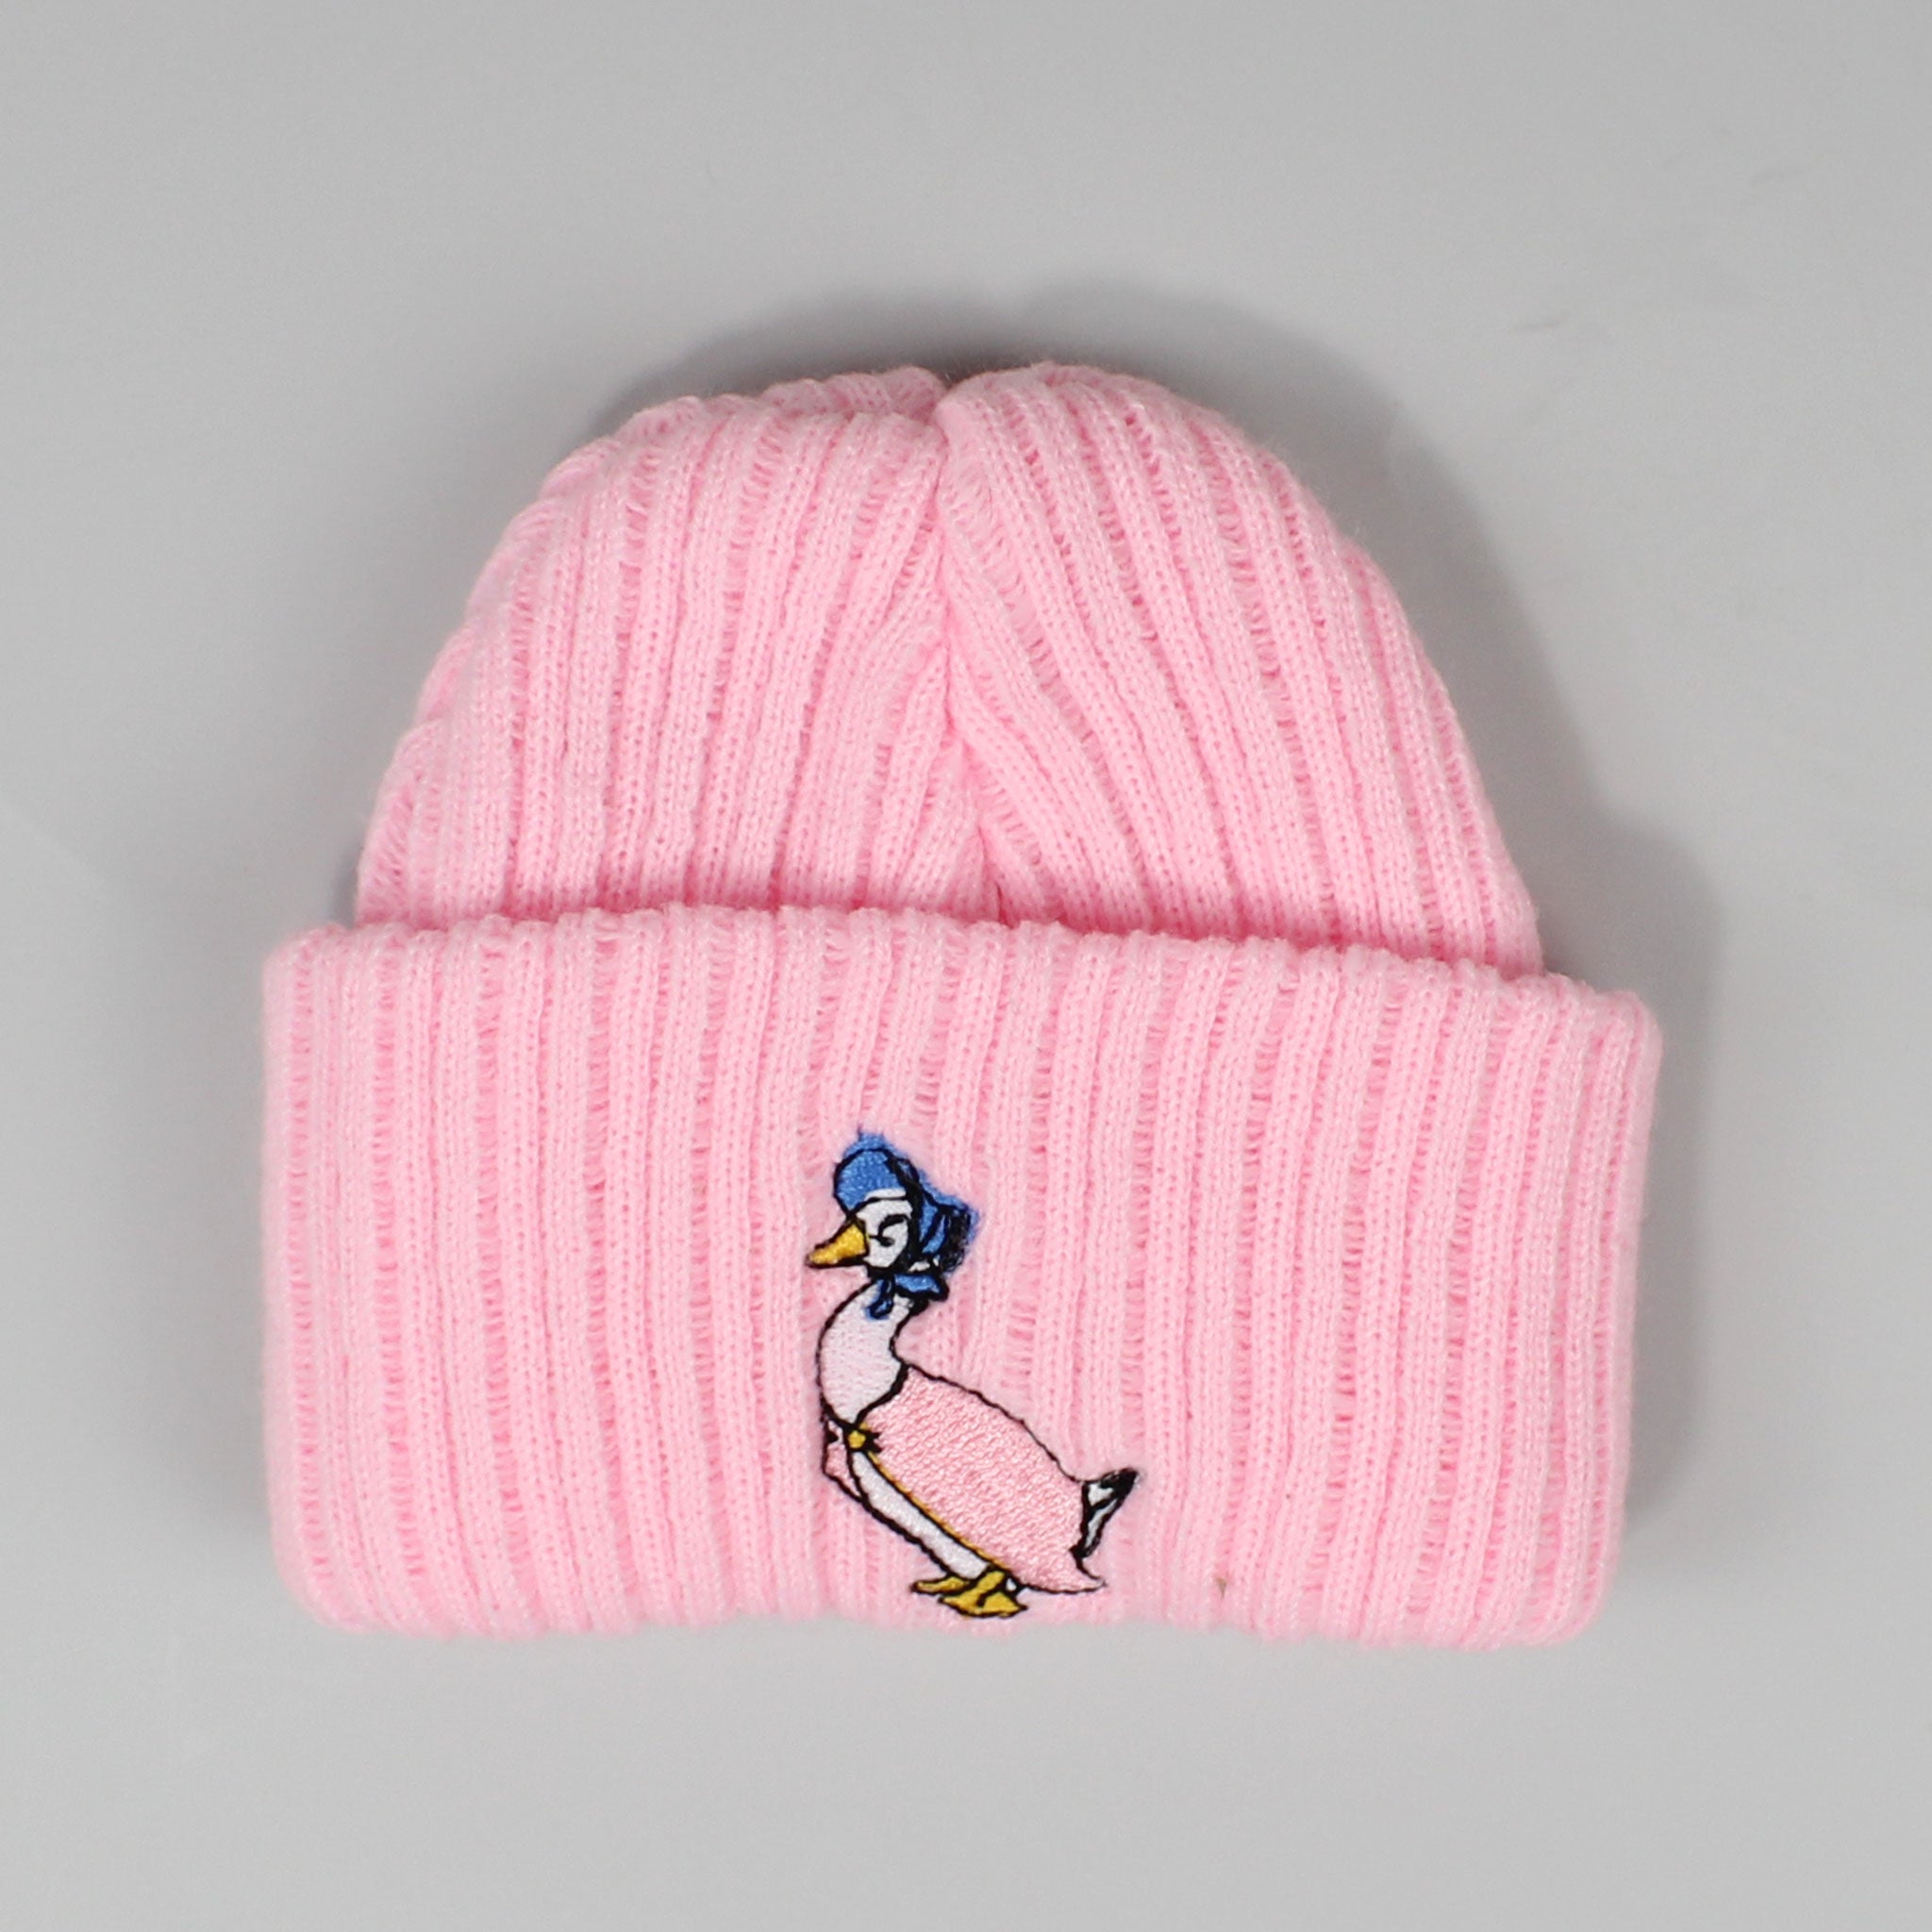 newborn hat - jemima puddleduck